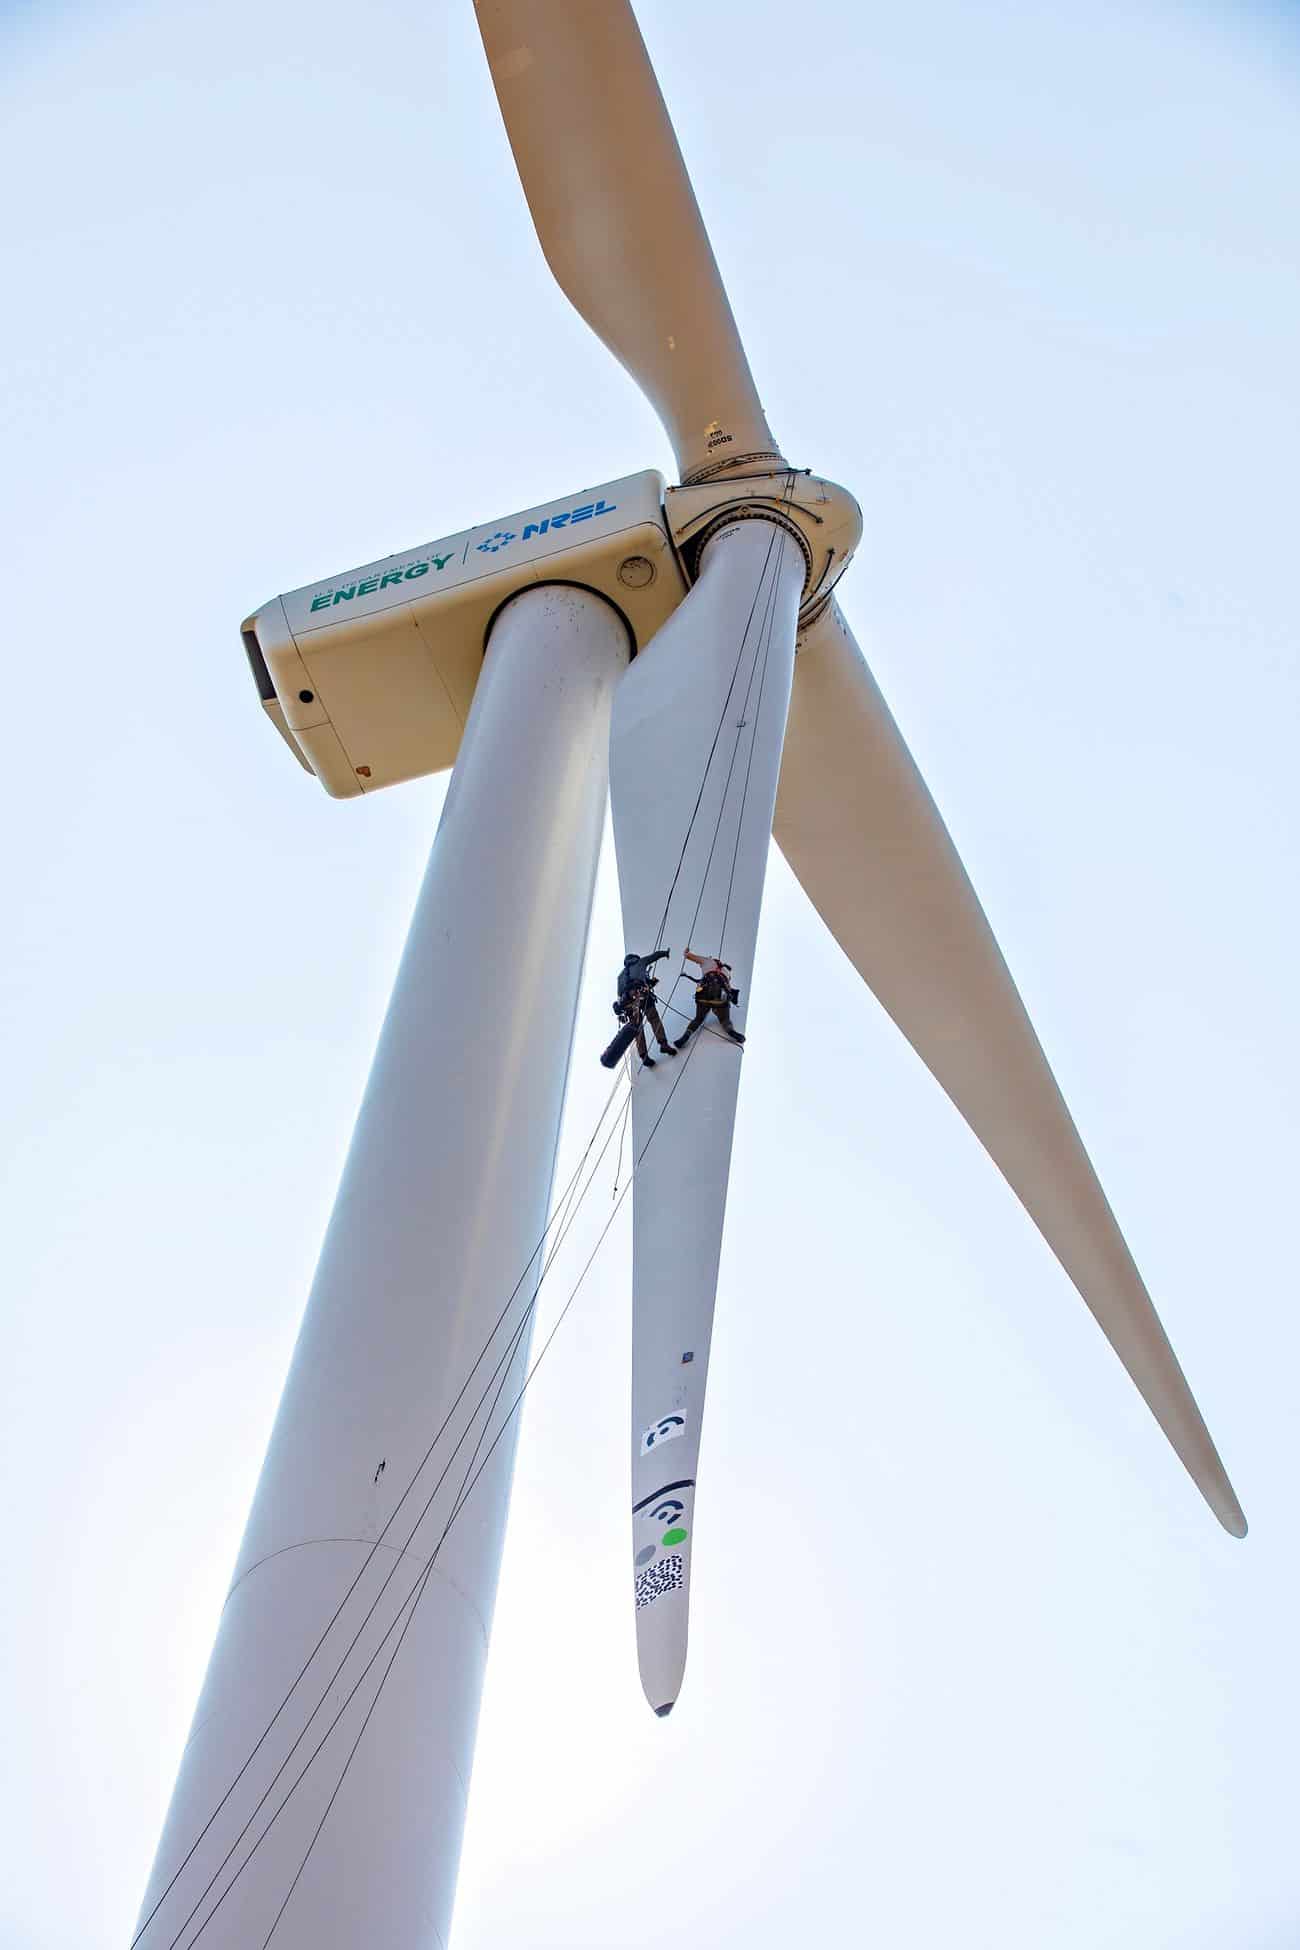 Wind turbine blade, renewable energy